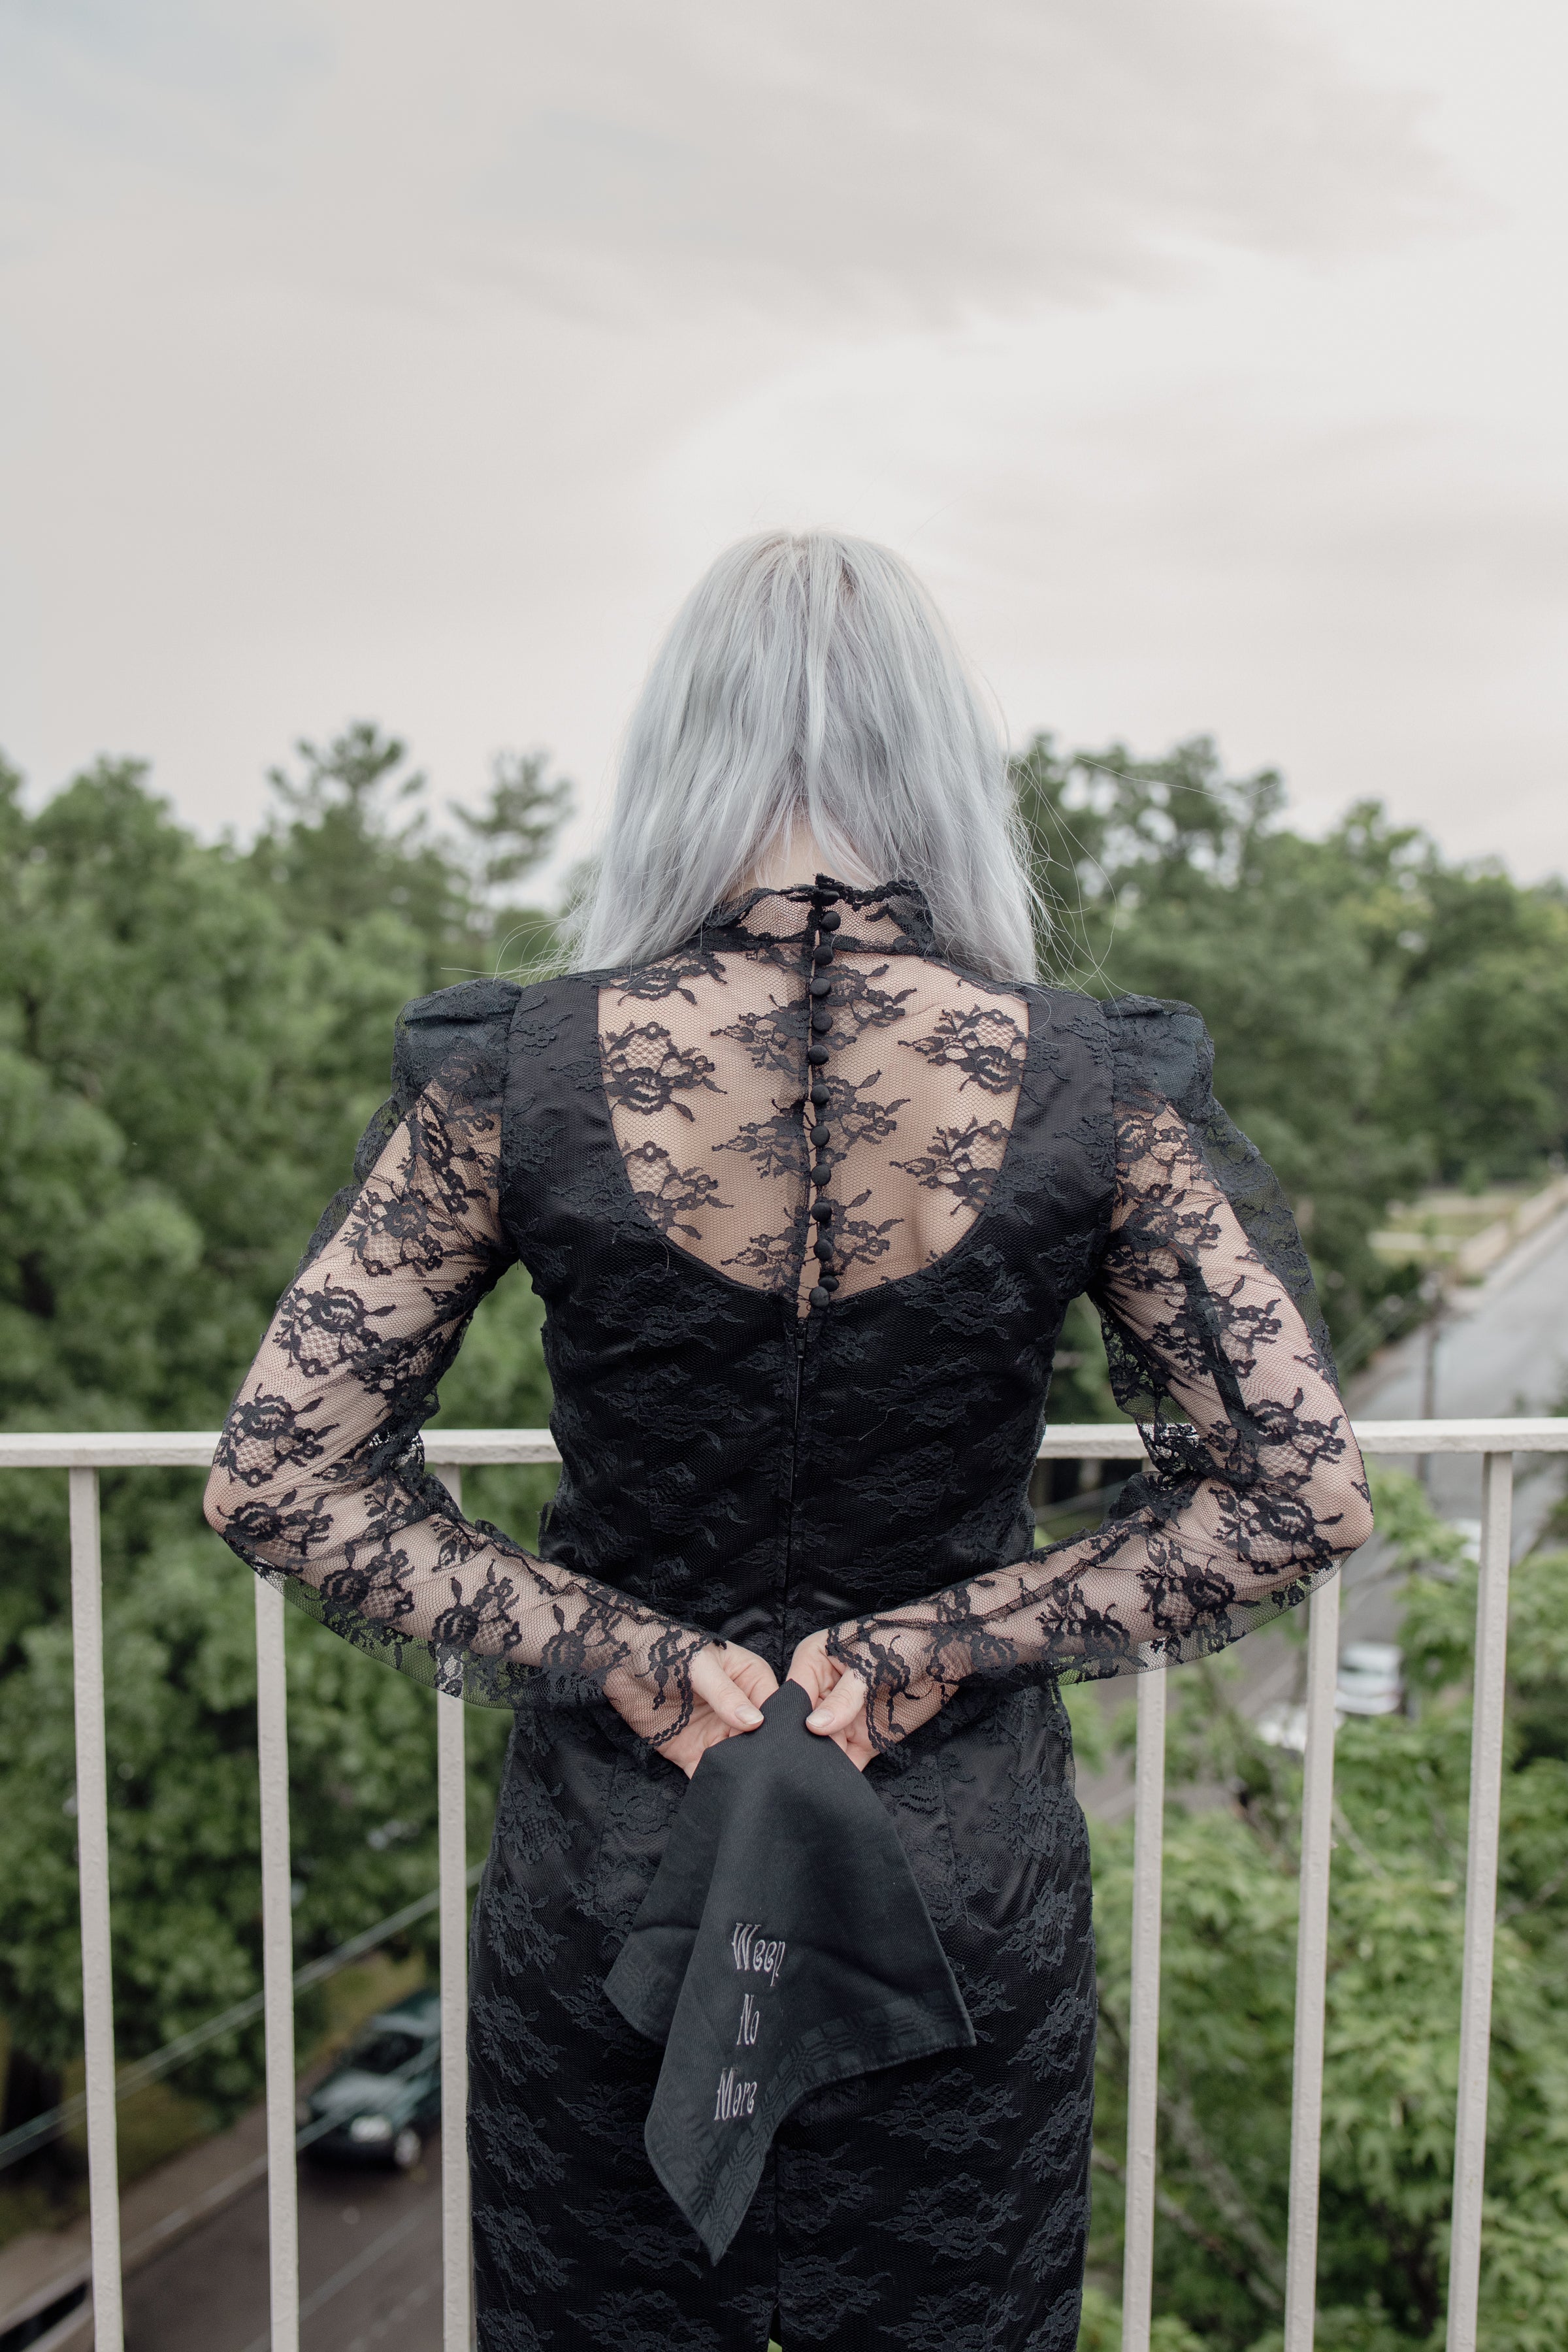 Goth Black Lace Dress